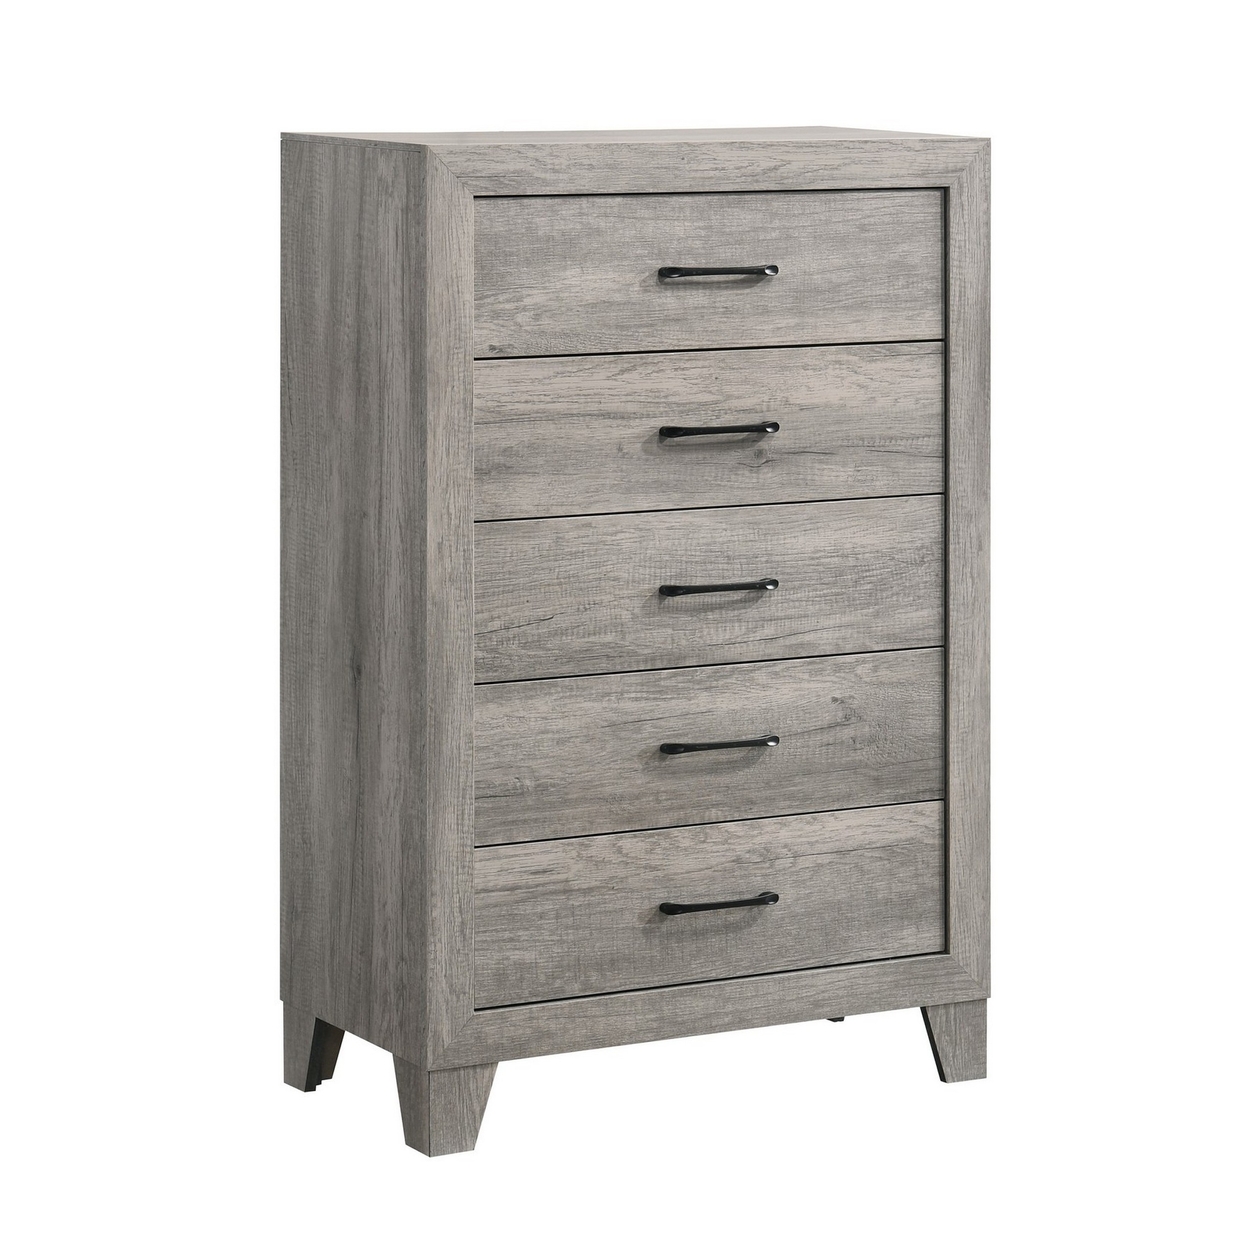 Isha 48 Inch 5 Drawer Tall Dresser Chest With Metal Handles, Driftwood Gray- Saltoro Sherpi